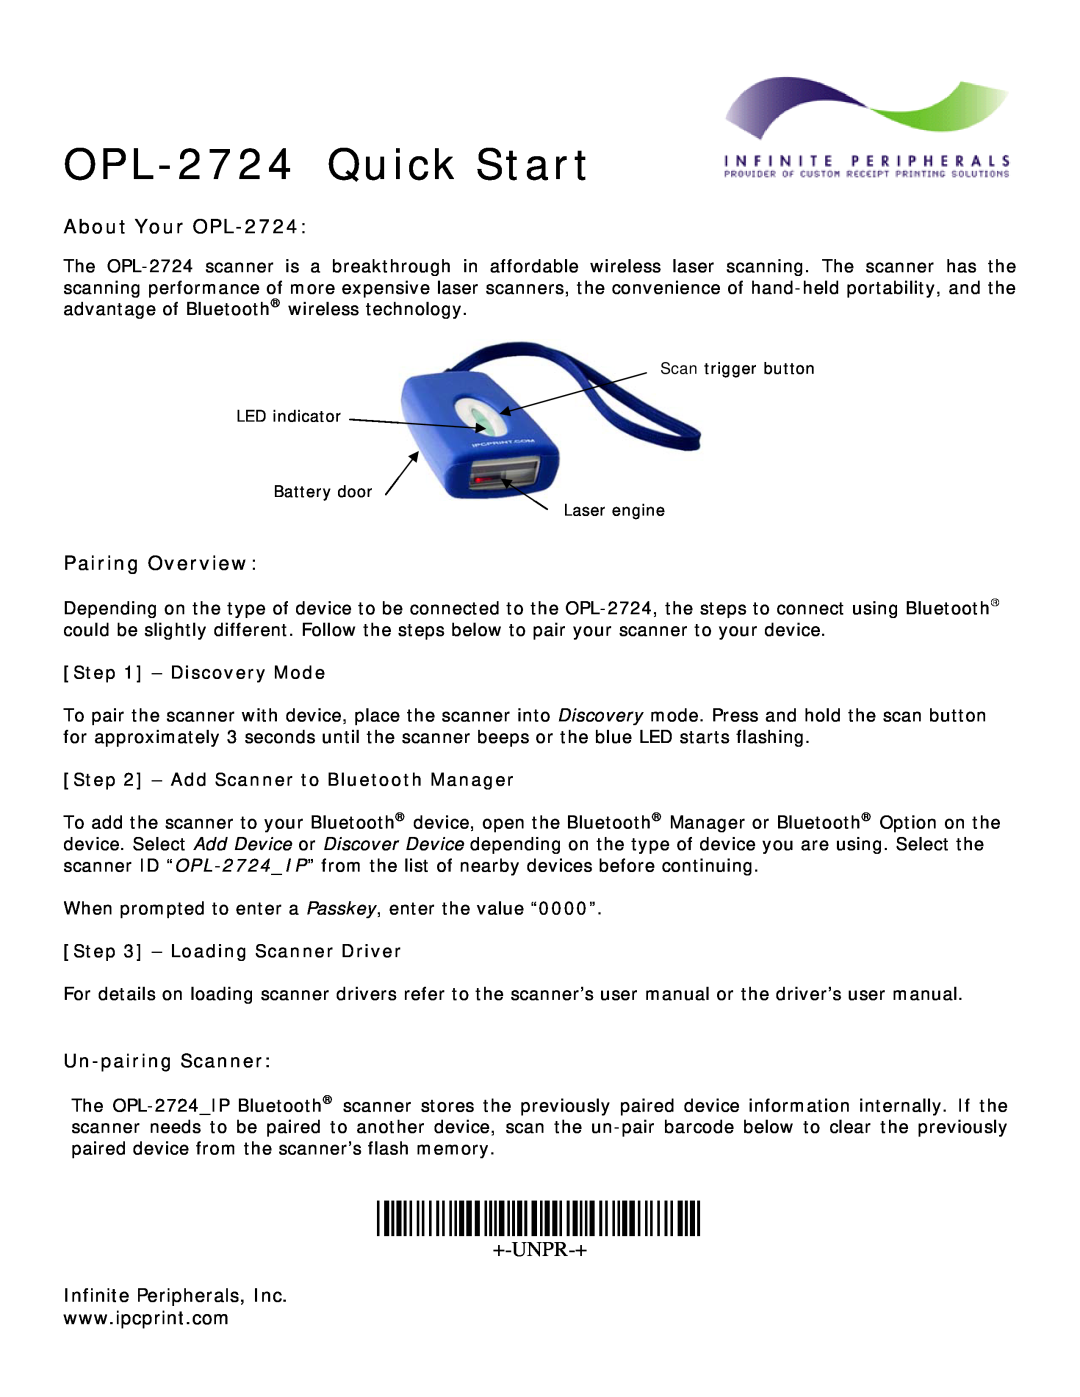 Infinite Peripherals quick start OPL-2724 Quick Start, Voqs, +-Unpr-+, About Your OPL-2724, Pairing Overview 